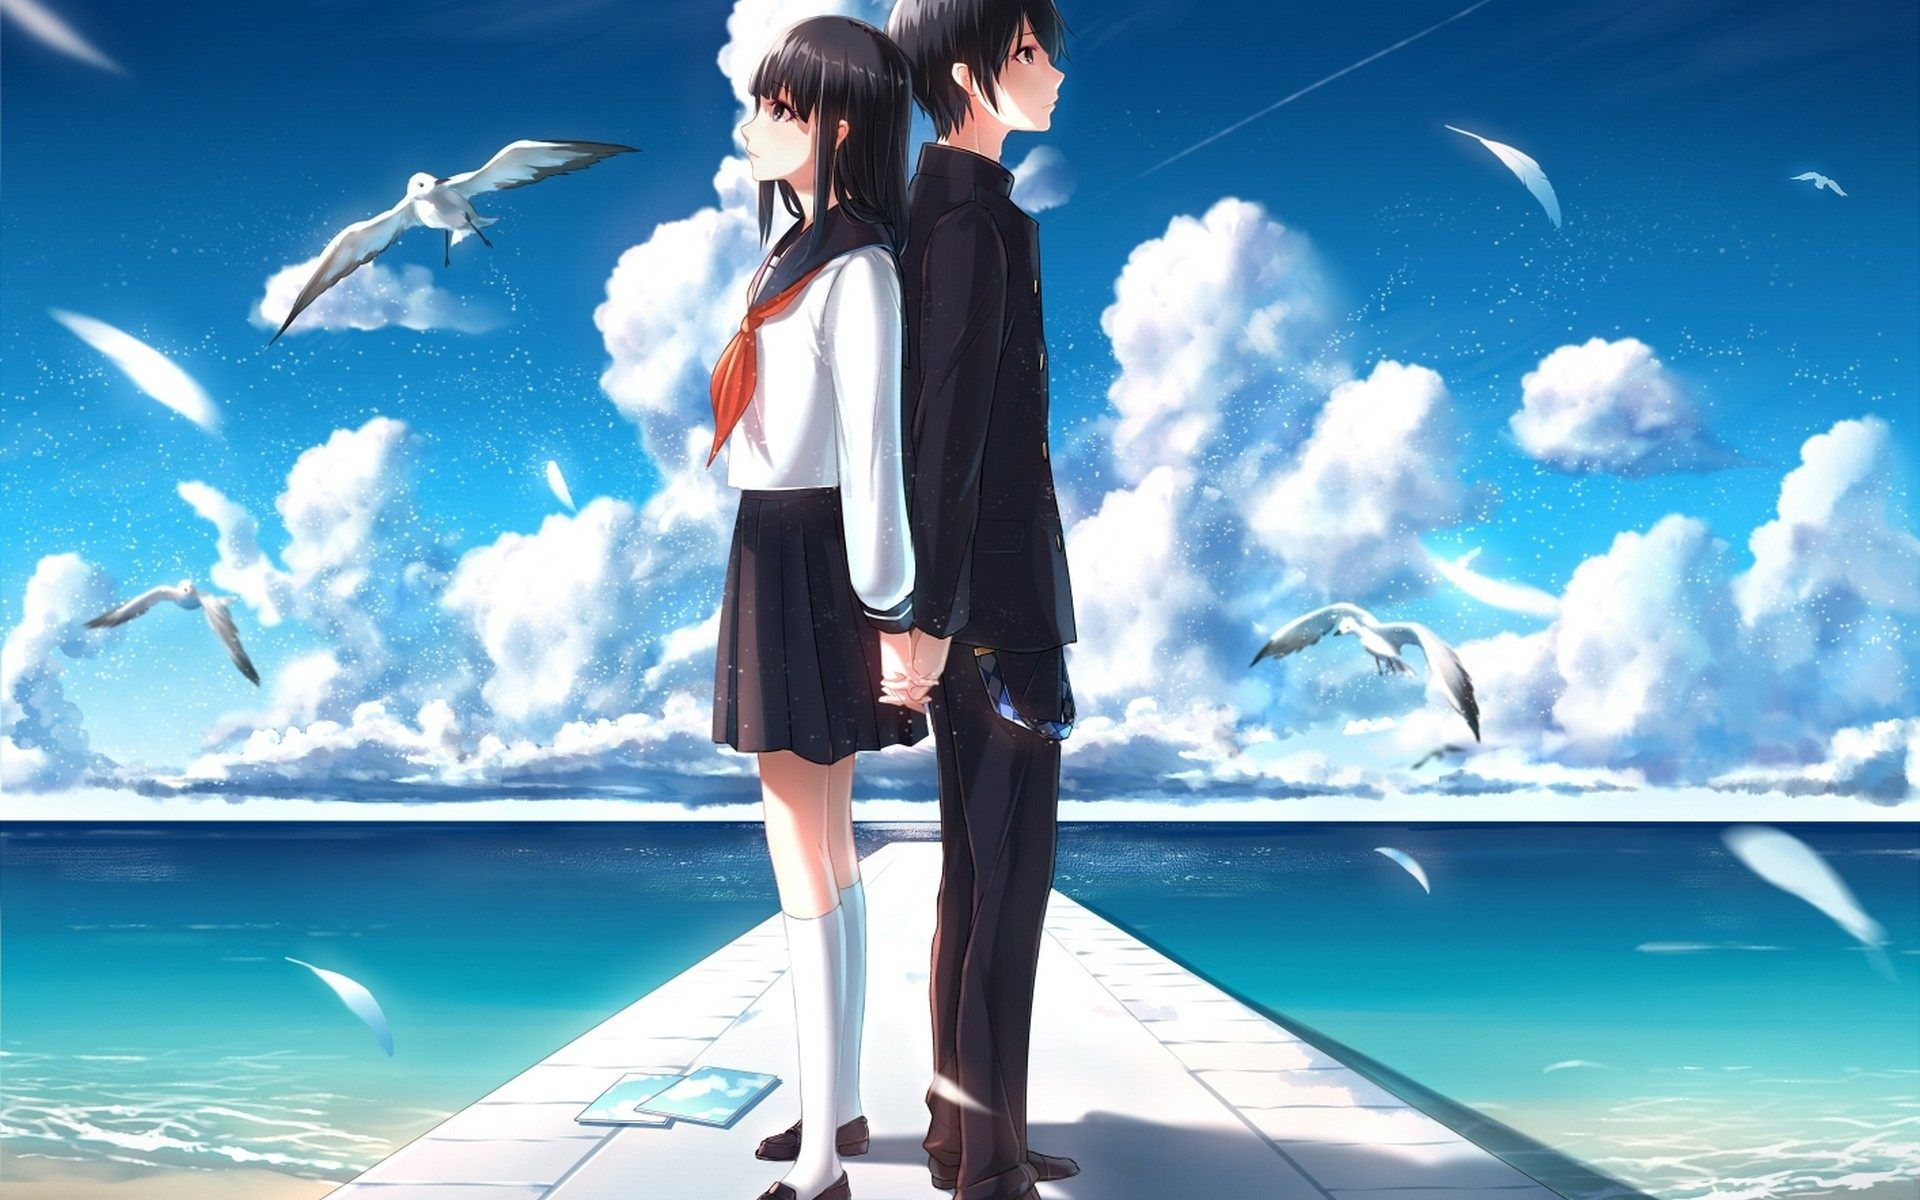 Anime Boy And Girl Wallpaper Hd - Anime Wallpaper Hd Romance - HD Wallpaper 